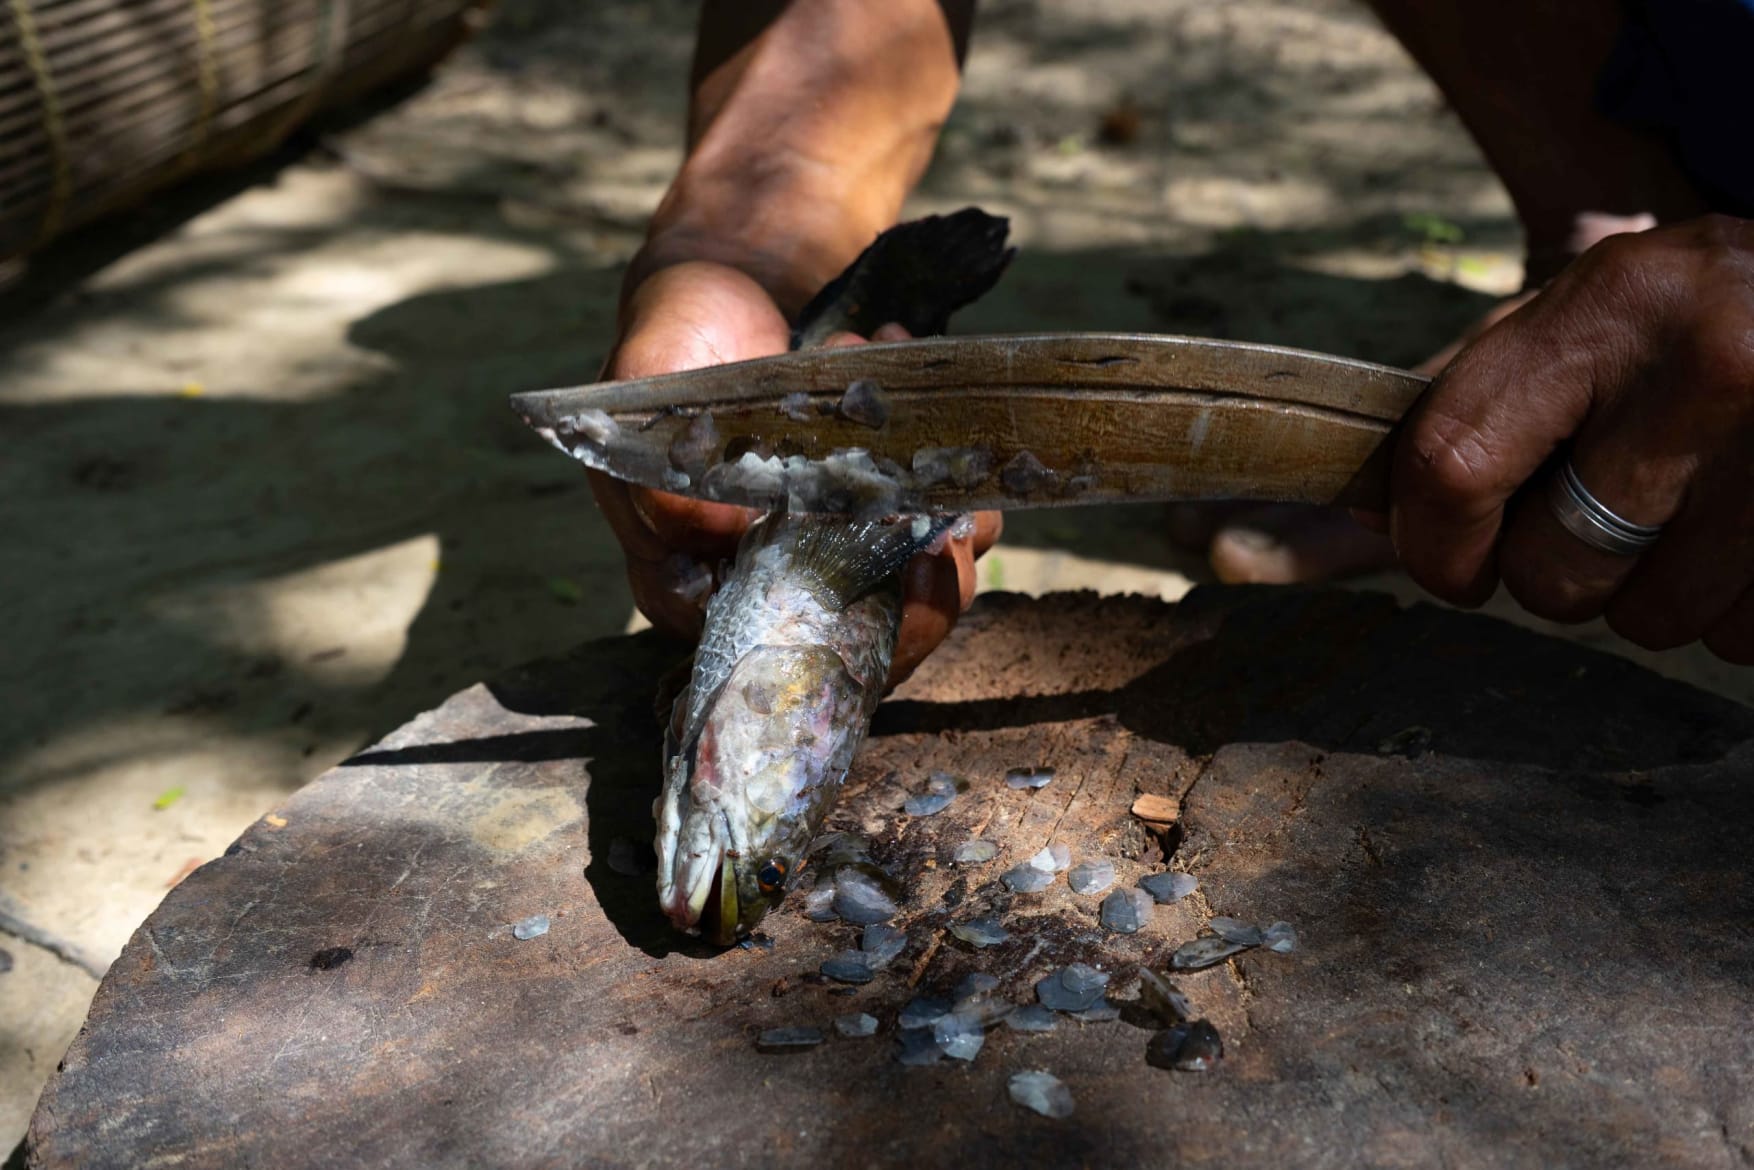 Bamboo Fish-trap Image & Photo (Free Trial)